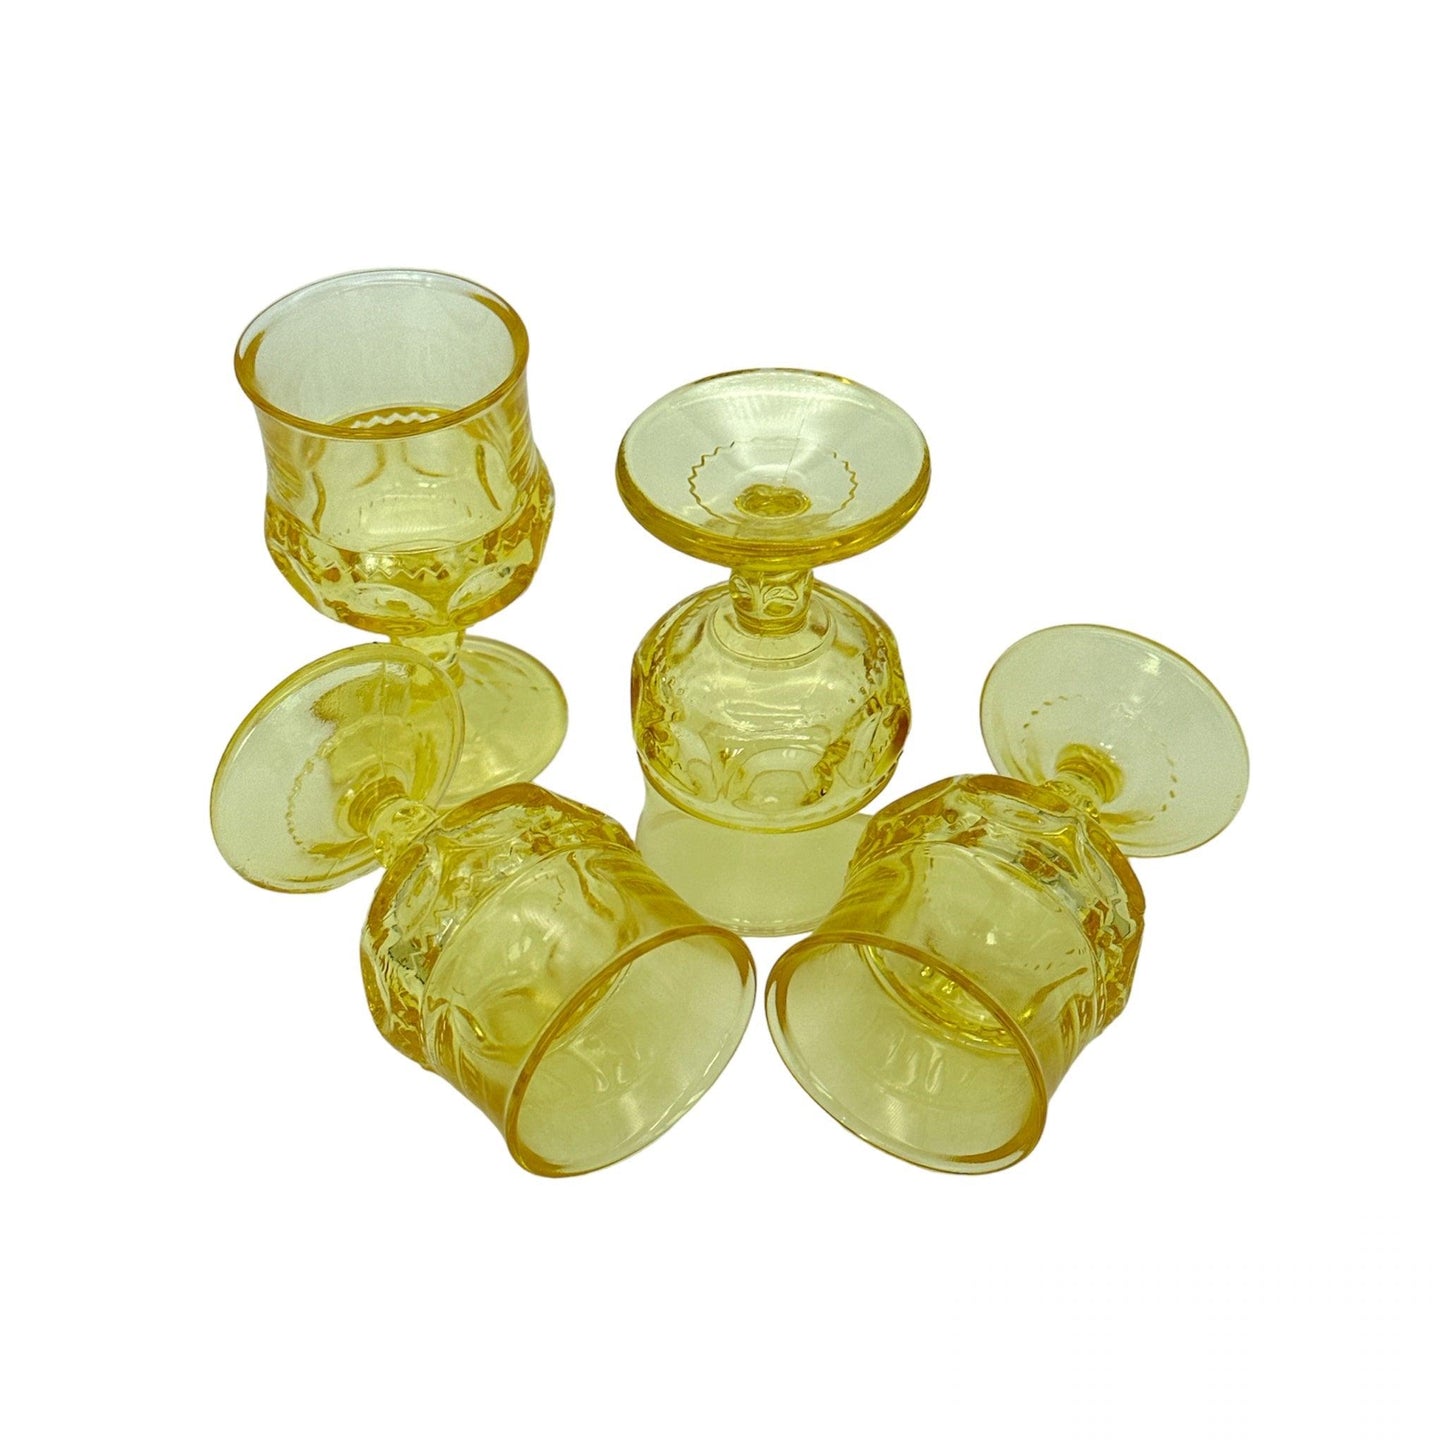 Kings Crown Glassware Thumbprint Glass Set | Vintage American Collectible